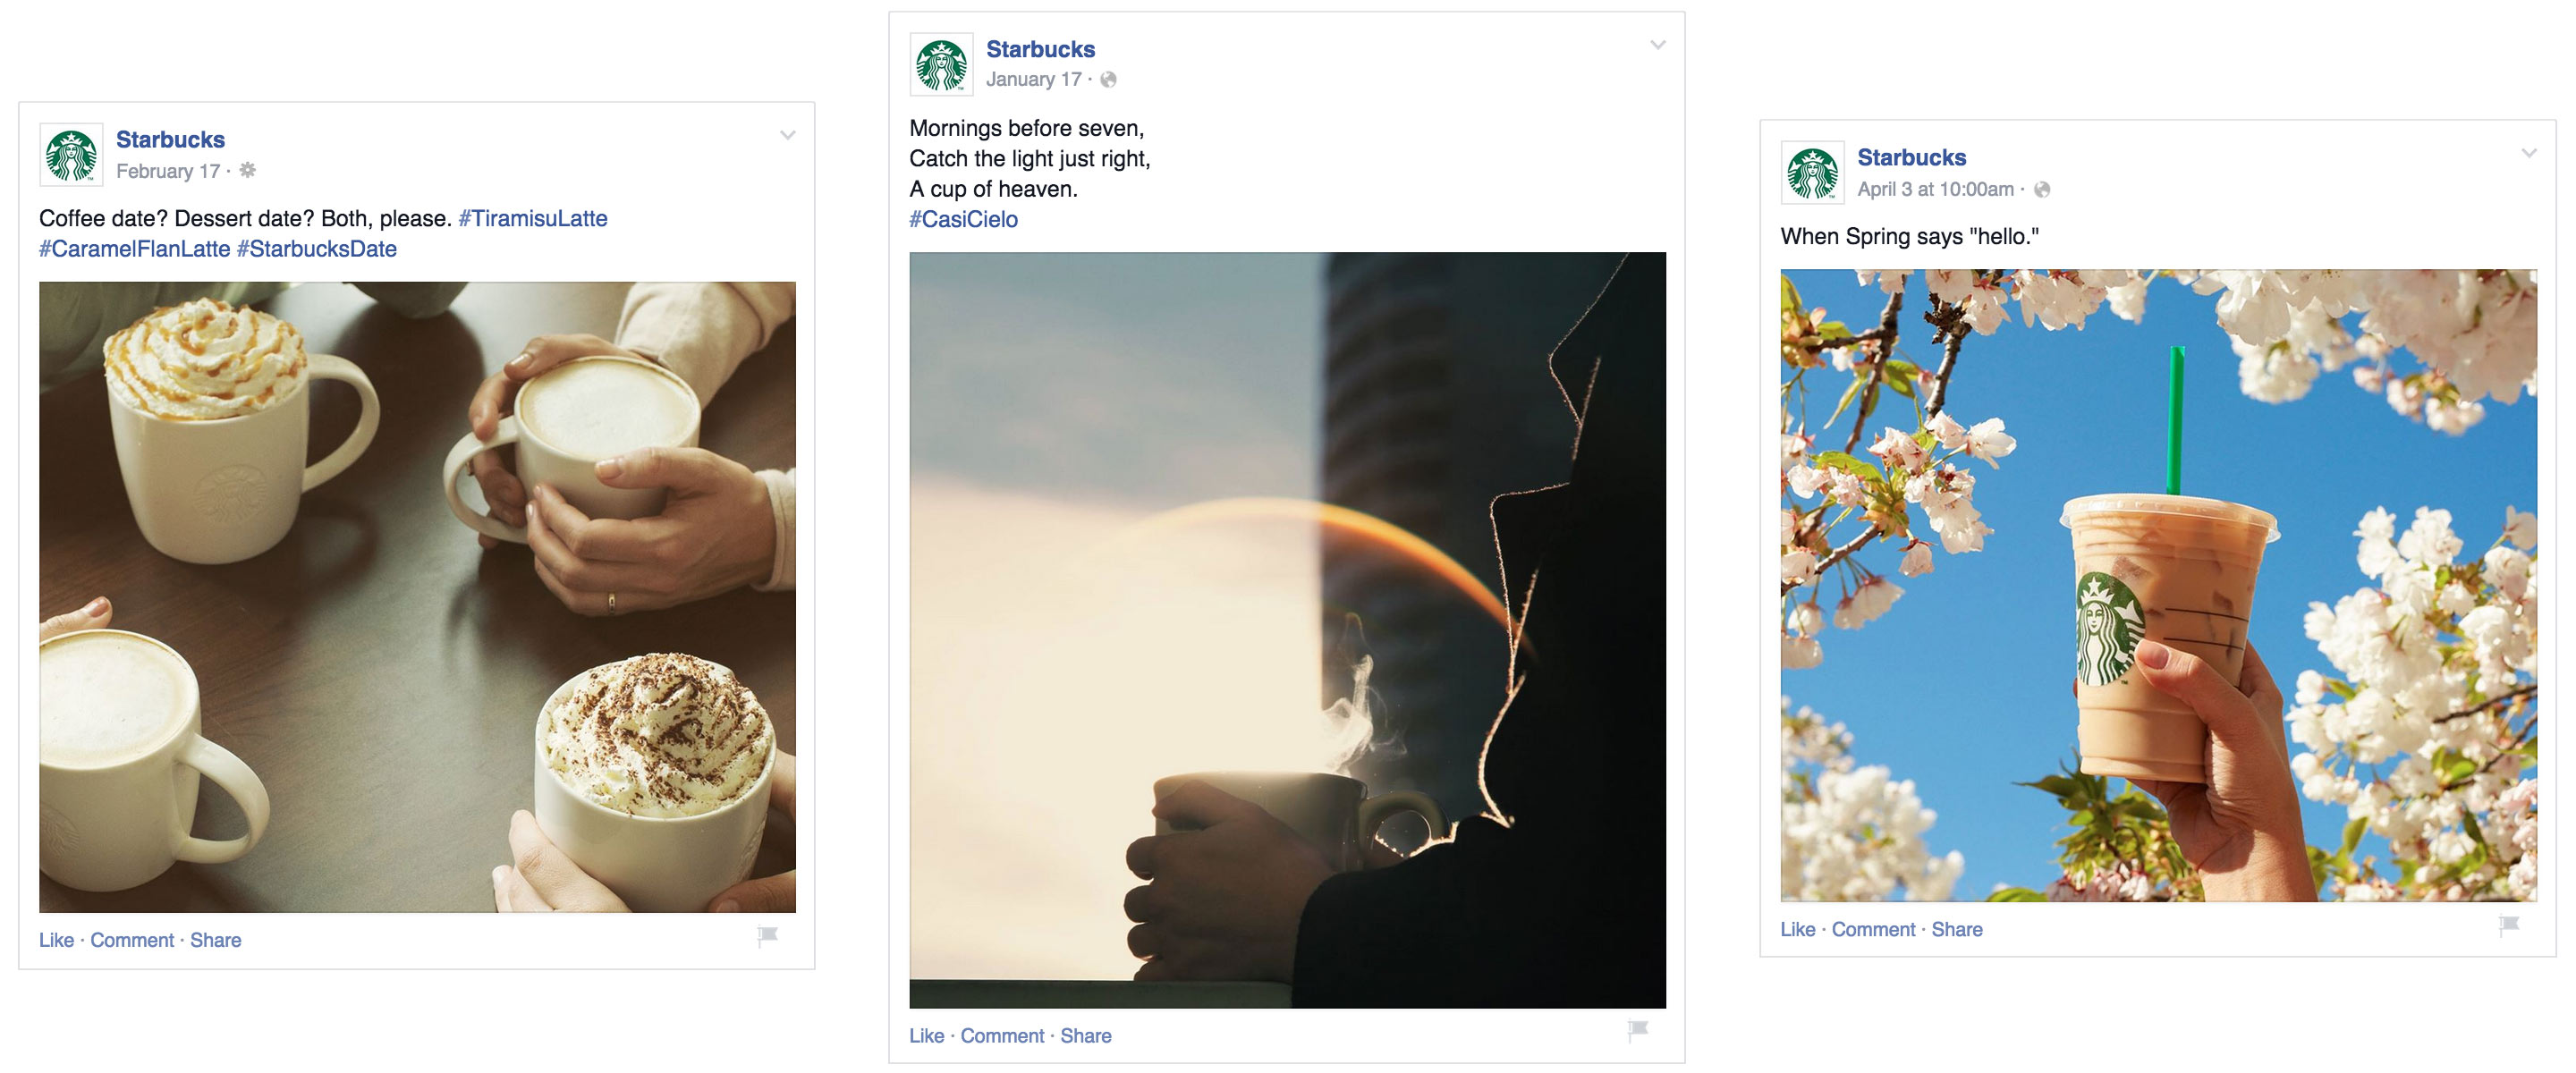 Starbucks Facebook Posts Engaging Photos Minimal Copy Creative